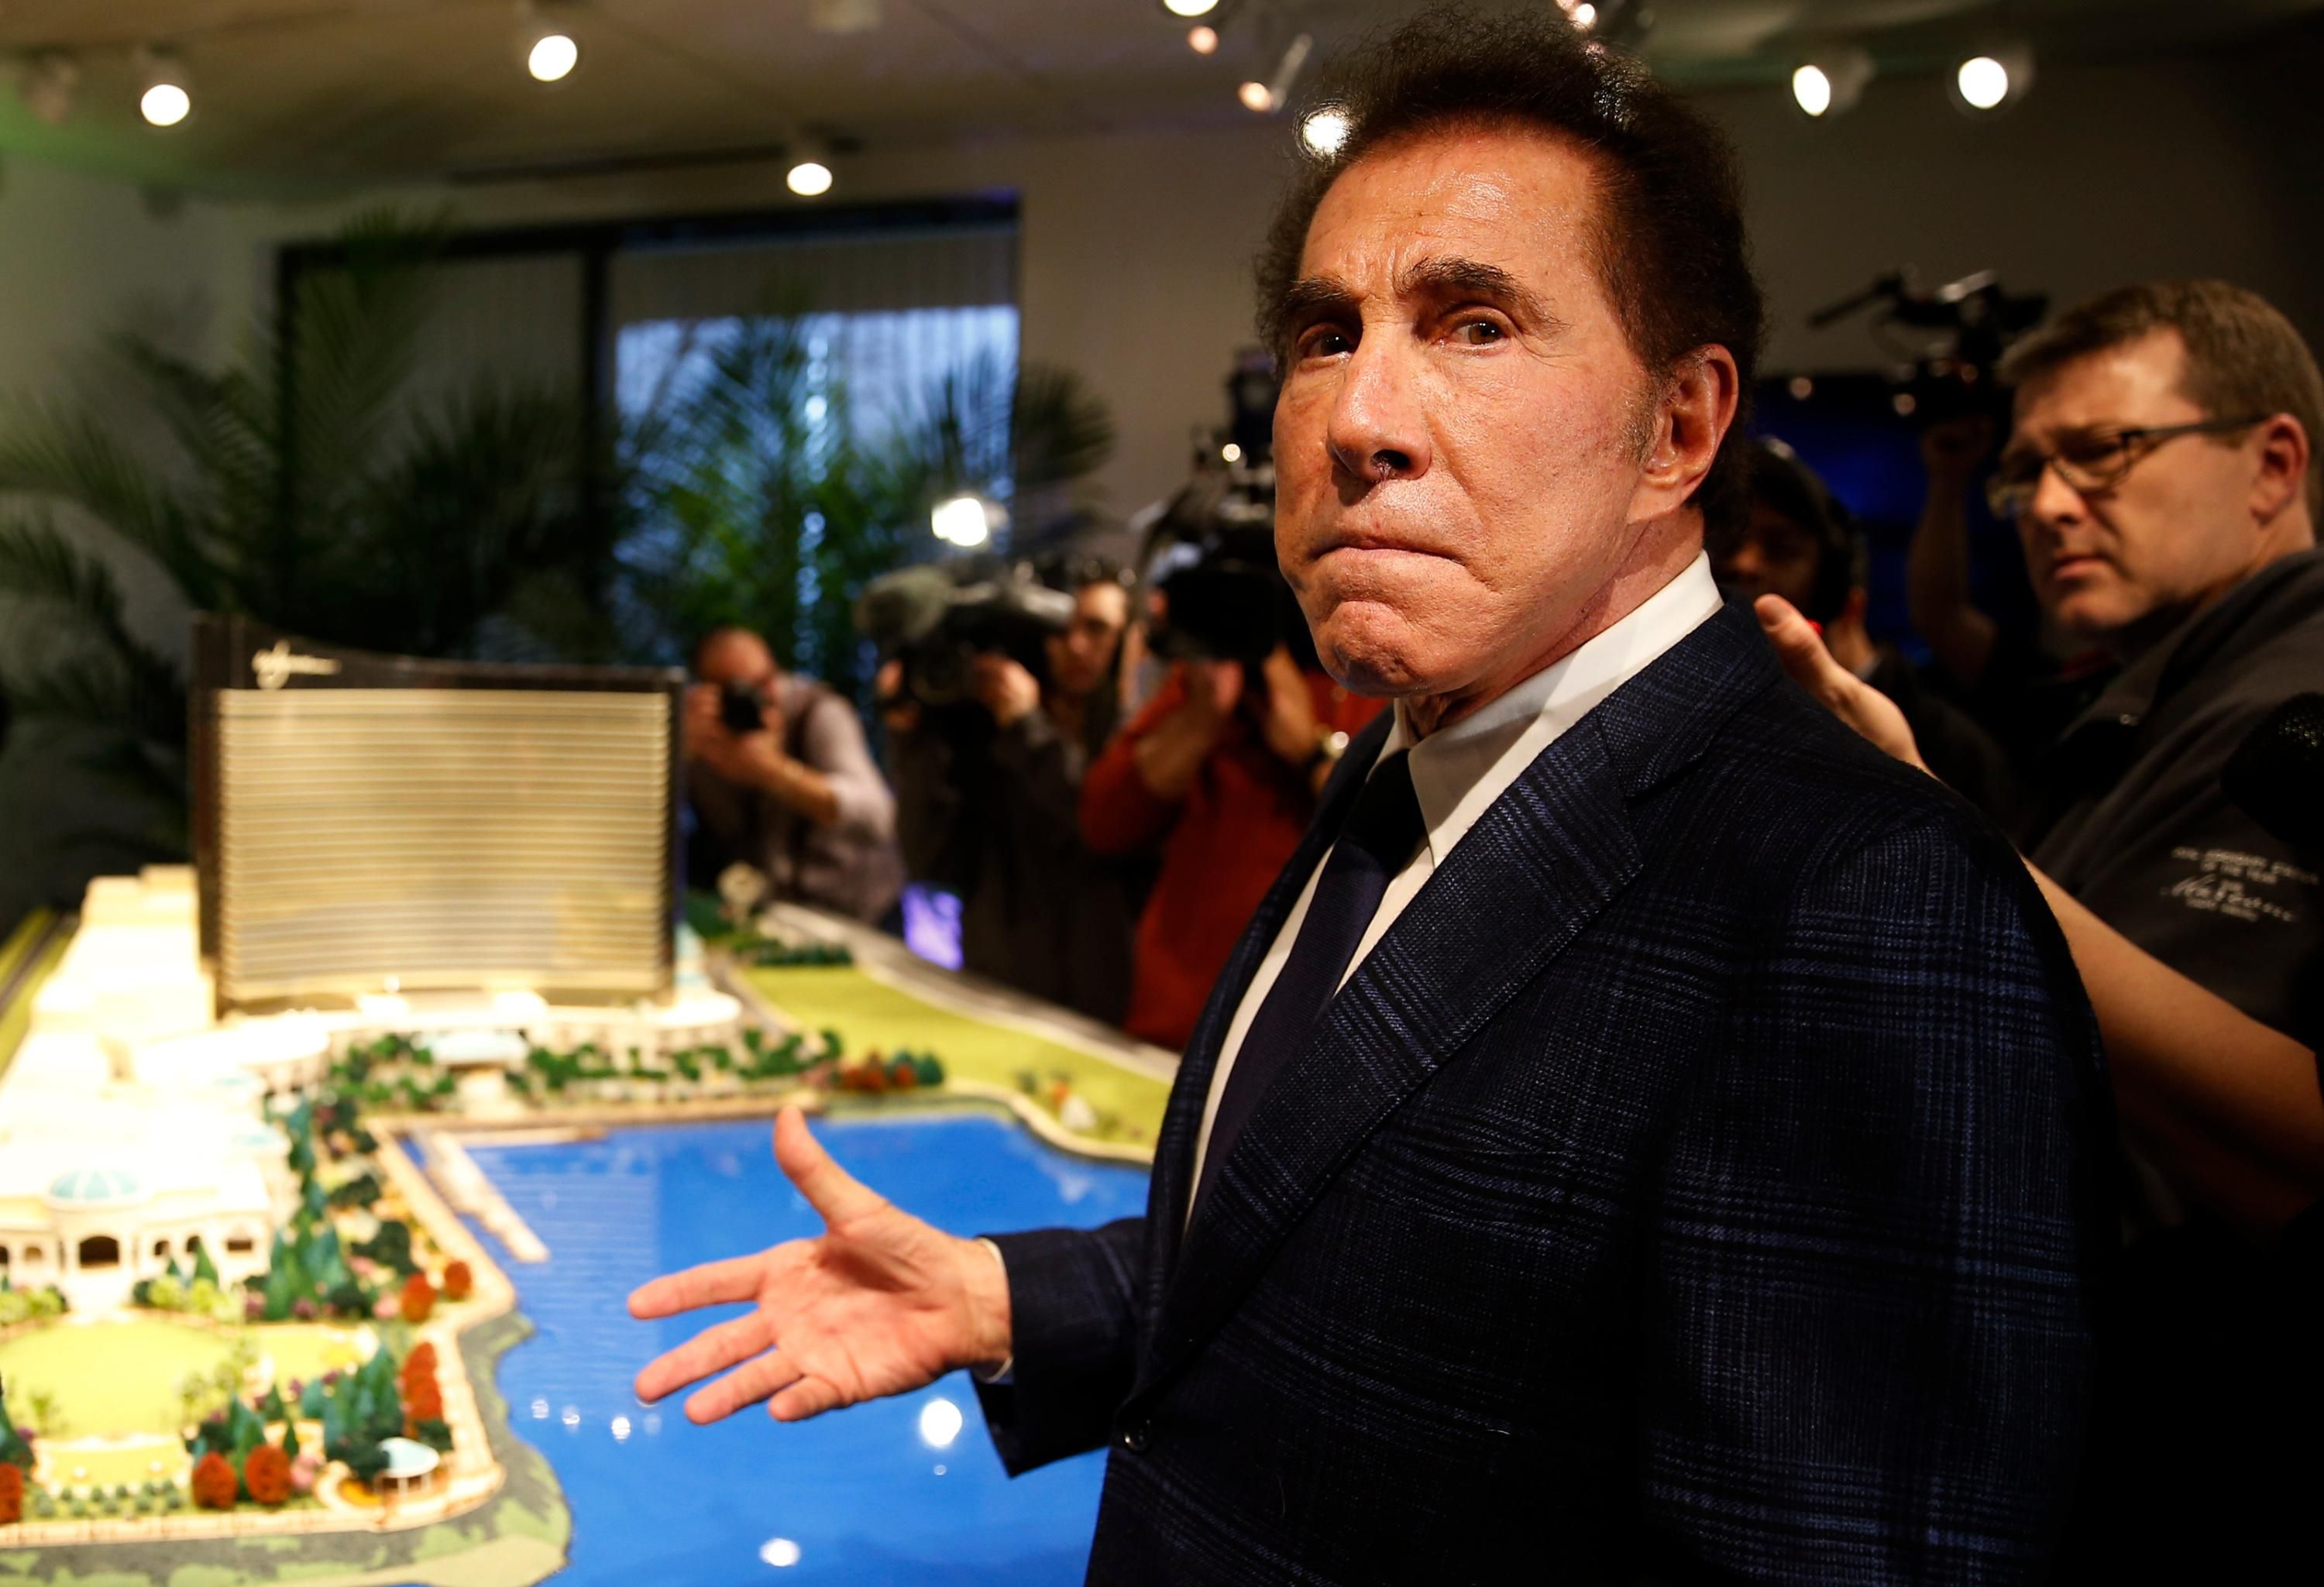 Billionaire casino magnate Steve Wynn shows off a planned casino